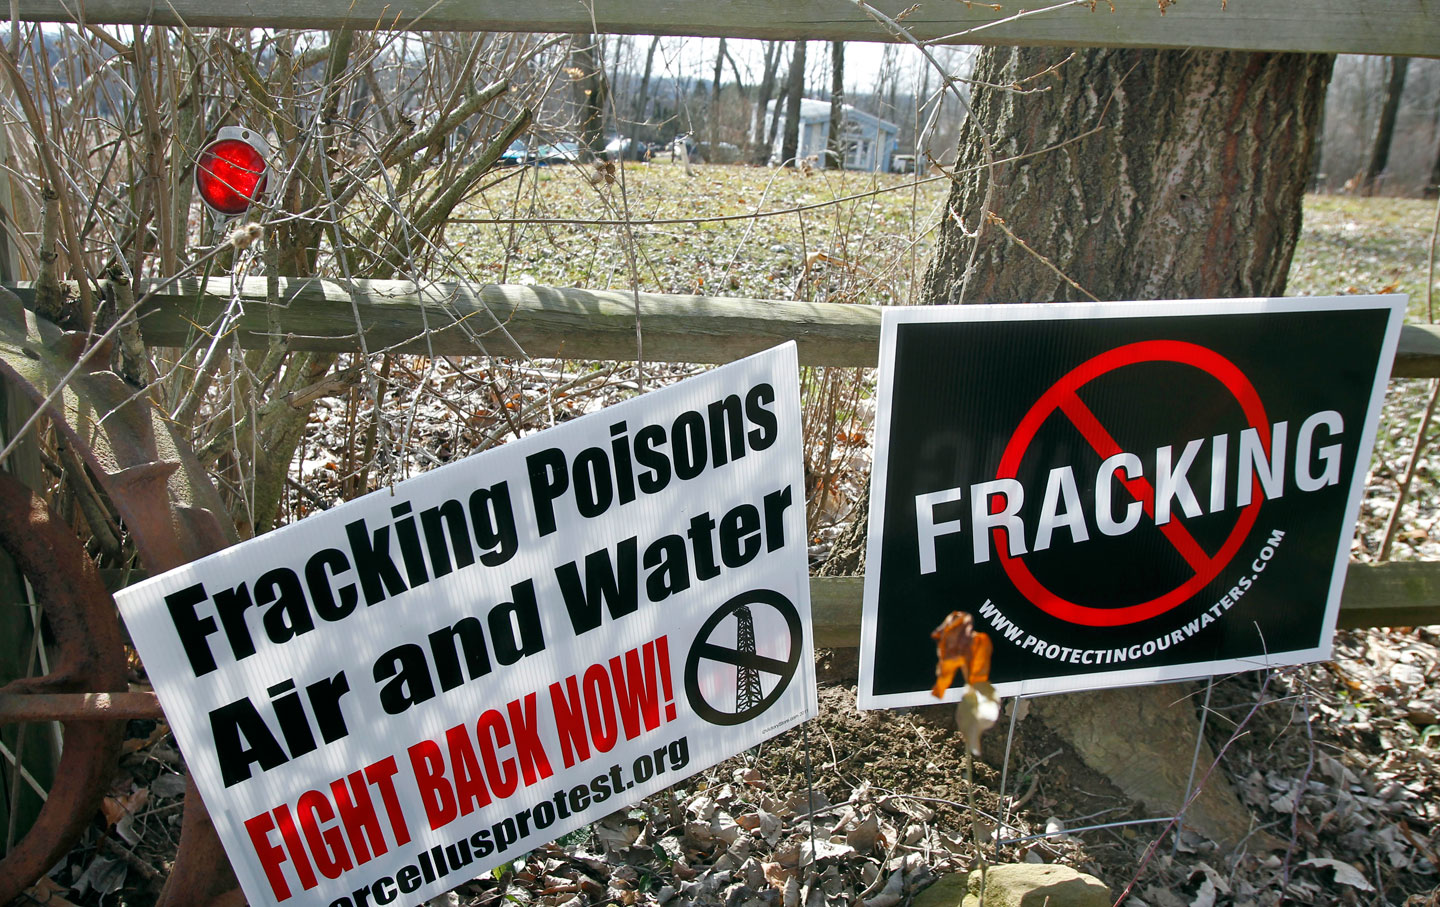 Signs opposing fracking